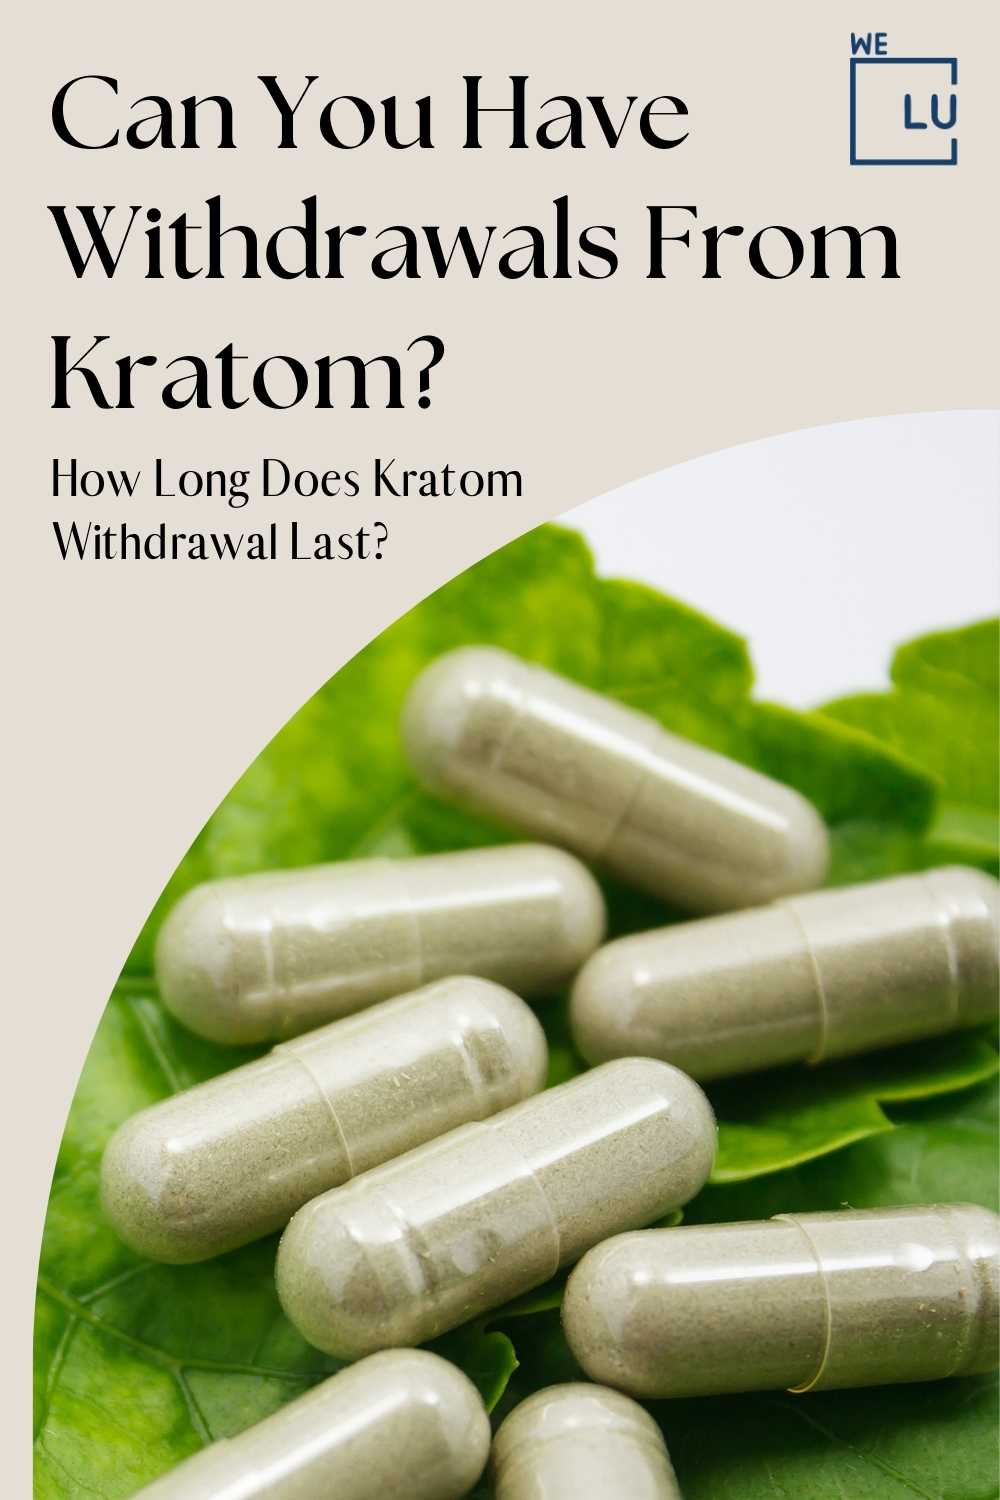 Kratom Addiction Dangerous Effects and Drug Rehab Treatment